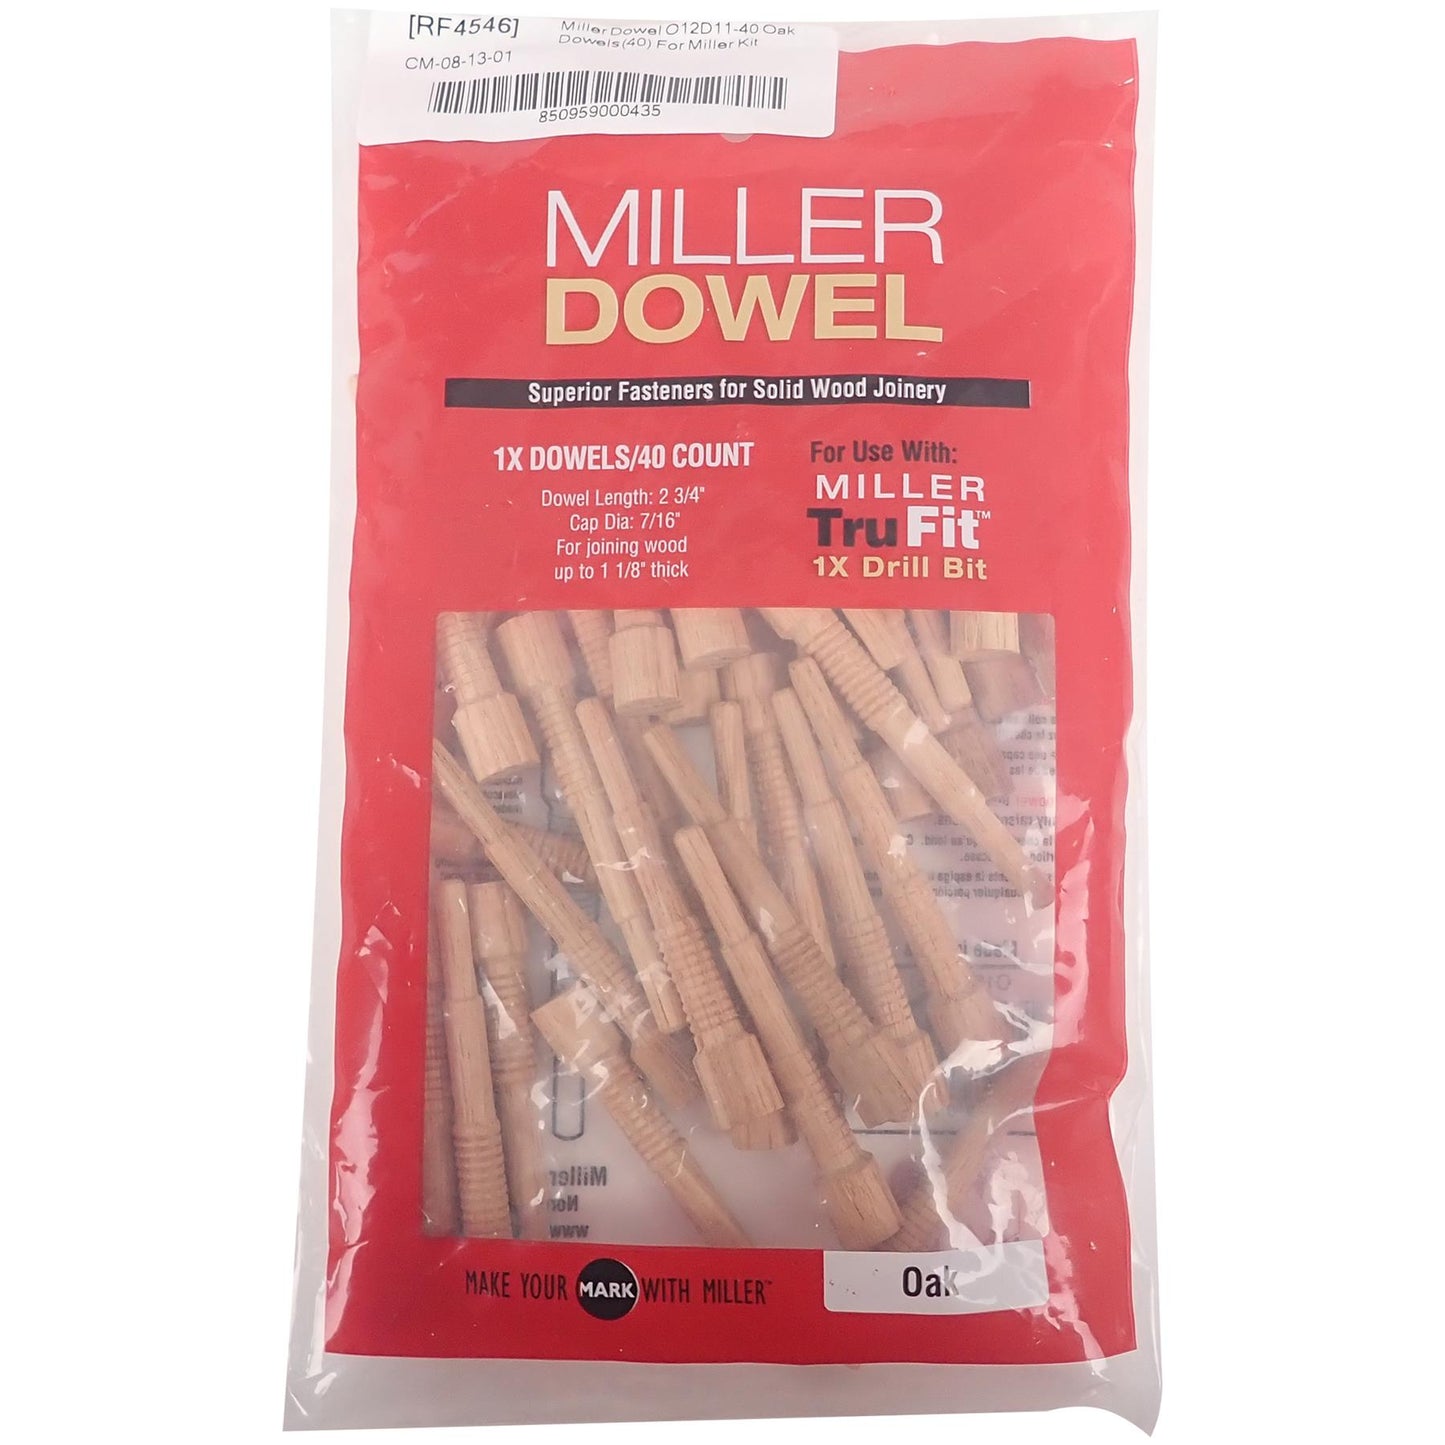 Miller Dowel O12D11-40 Oak 1x (Standard) Dowels (Pack of 40)